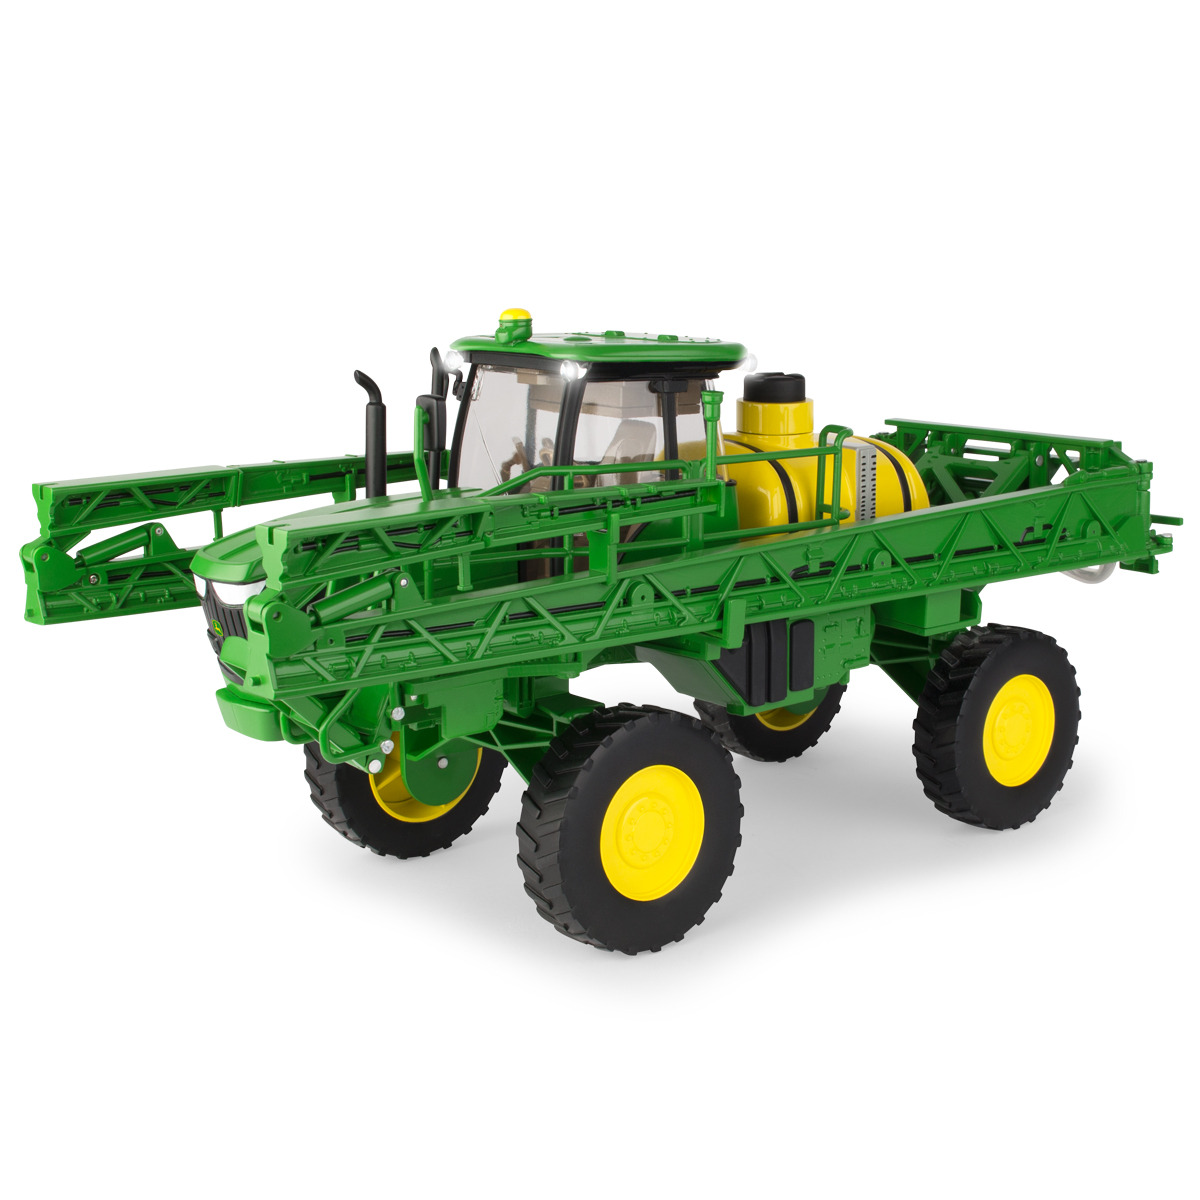 Big Farm R4023 Sprayer Toy